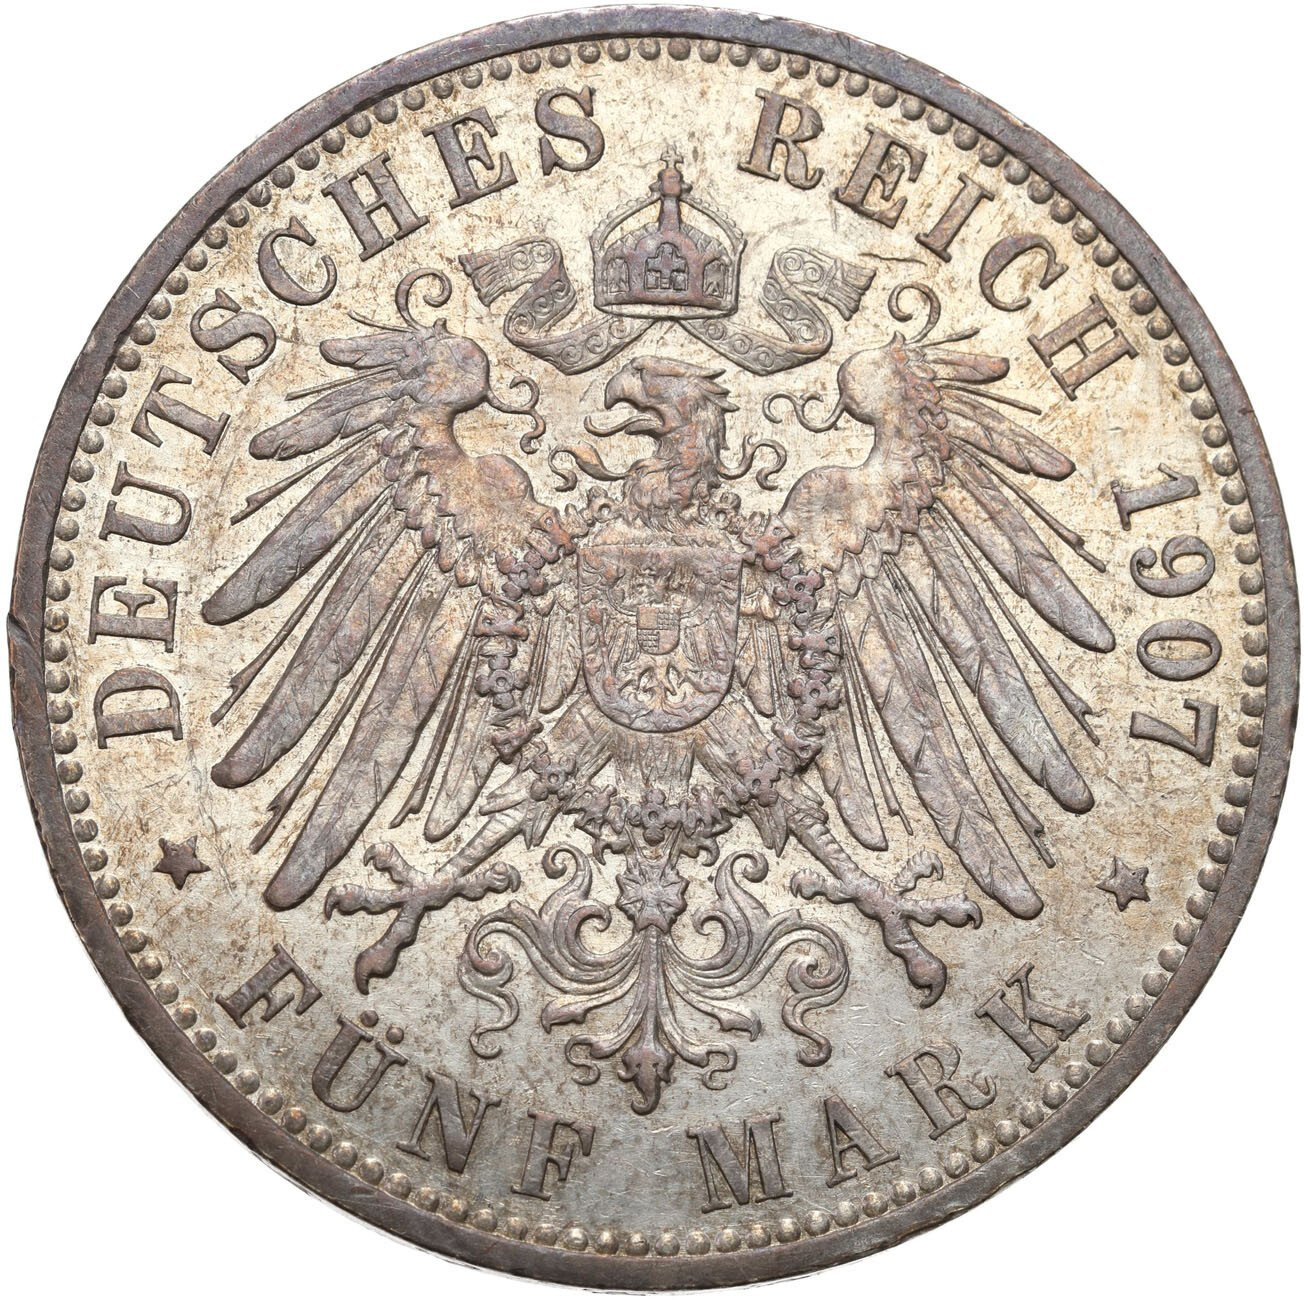 Niemcy, Prusy. Wilhelm II (1888-1918). 5 marek 1907 A, Berlin